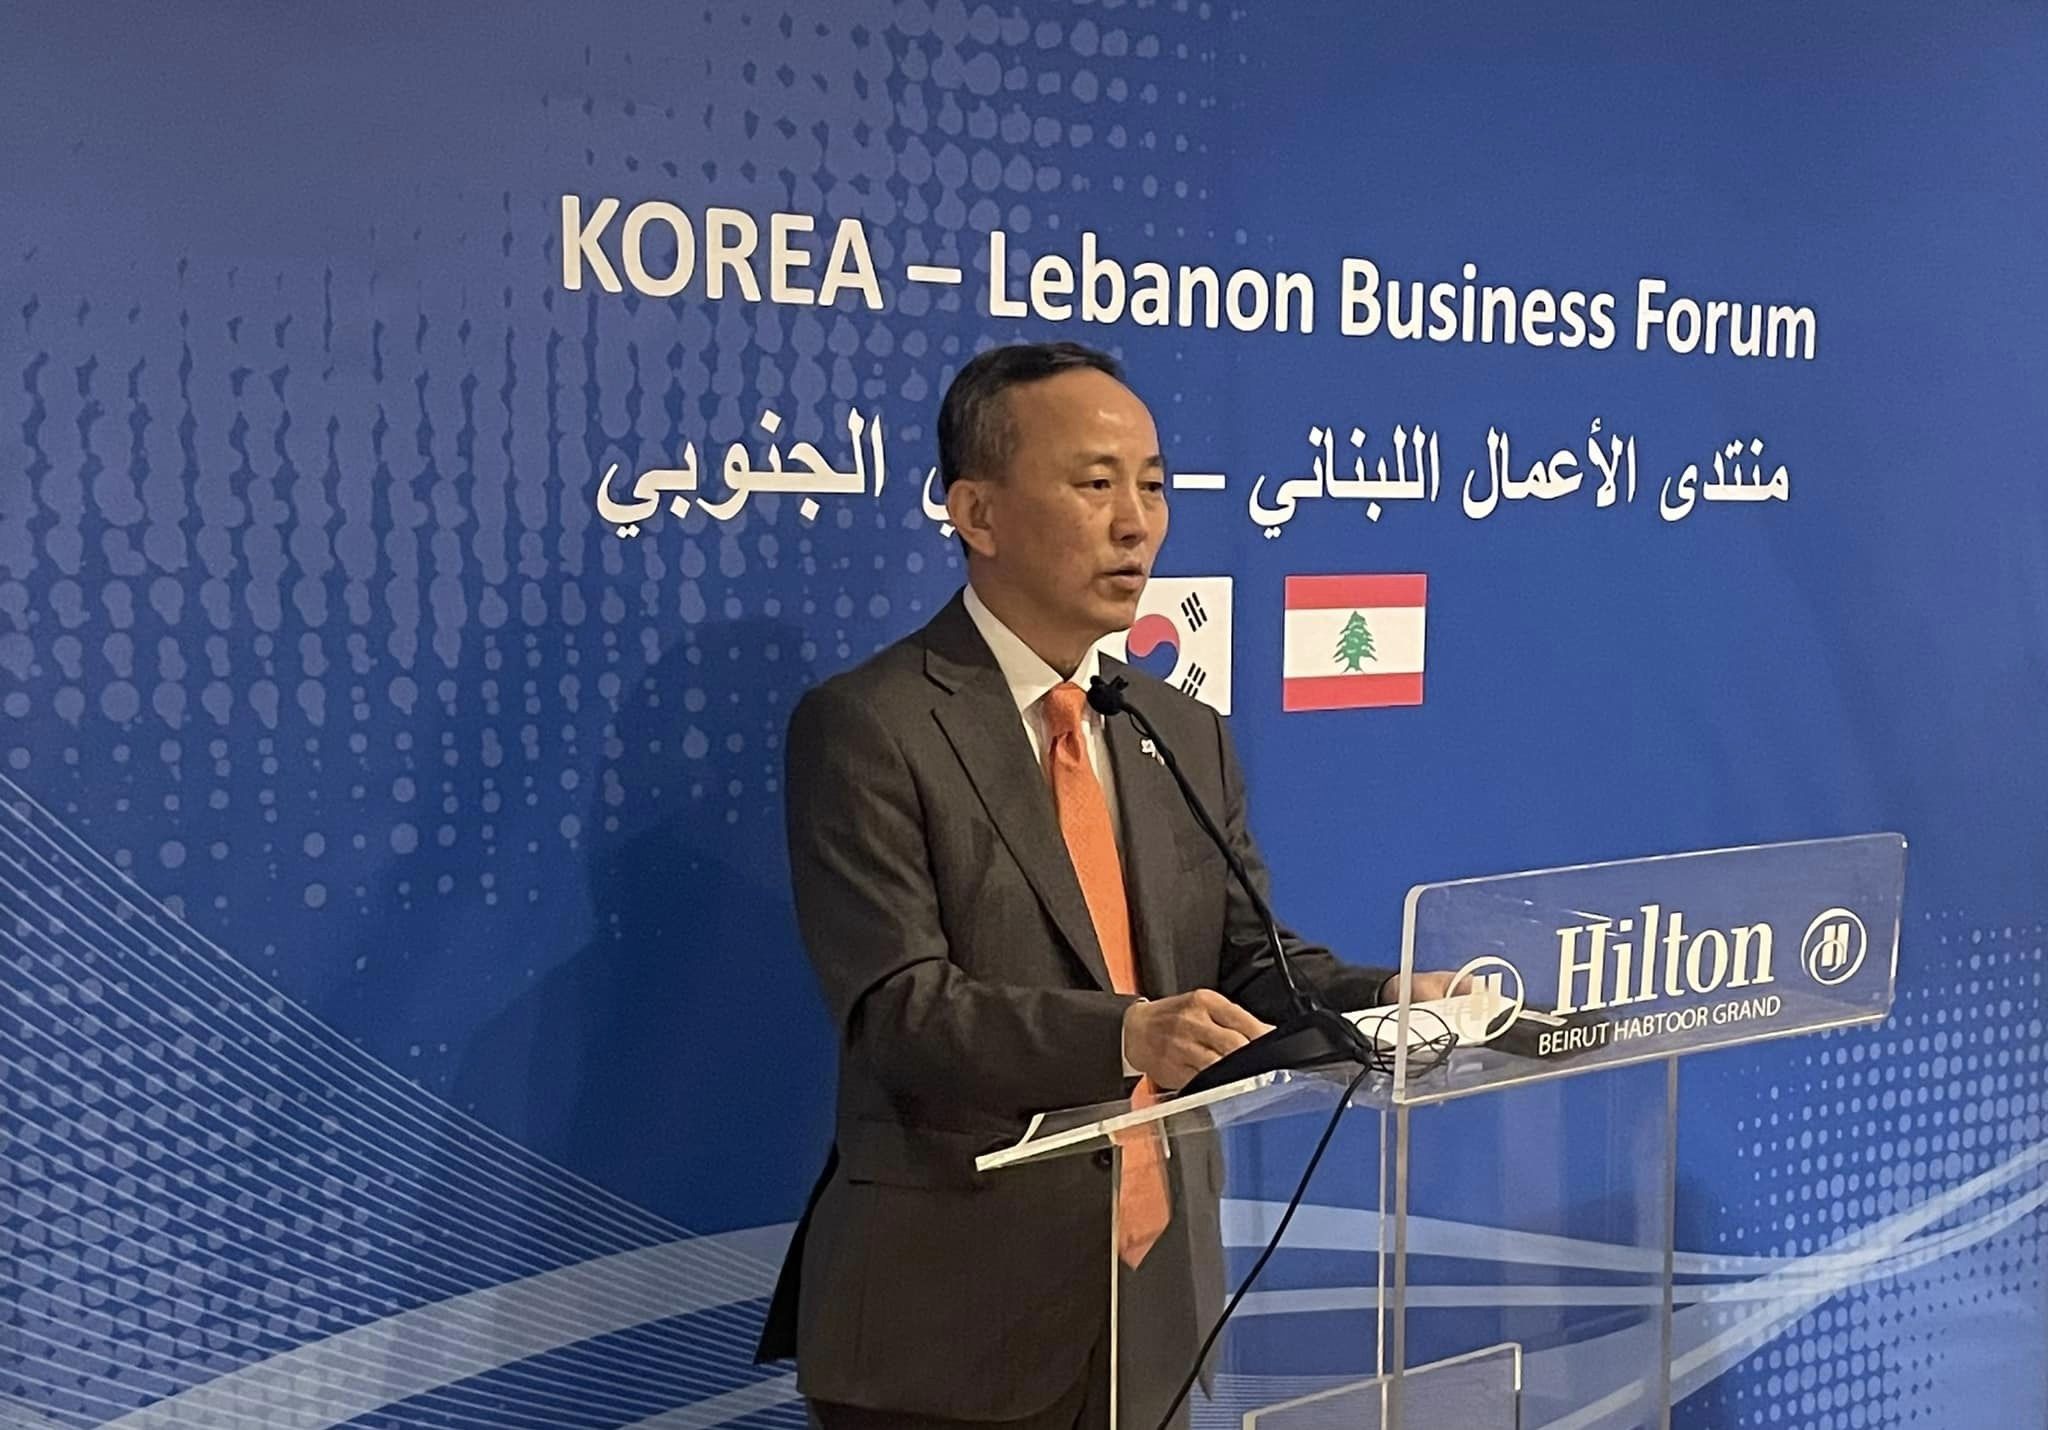 The Embassy of the Republic of Korea to Lebanon held the Korean Lebanese Business Forum